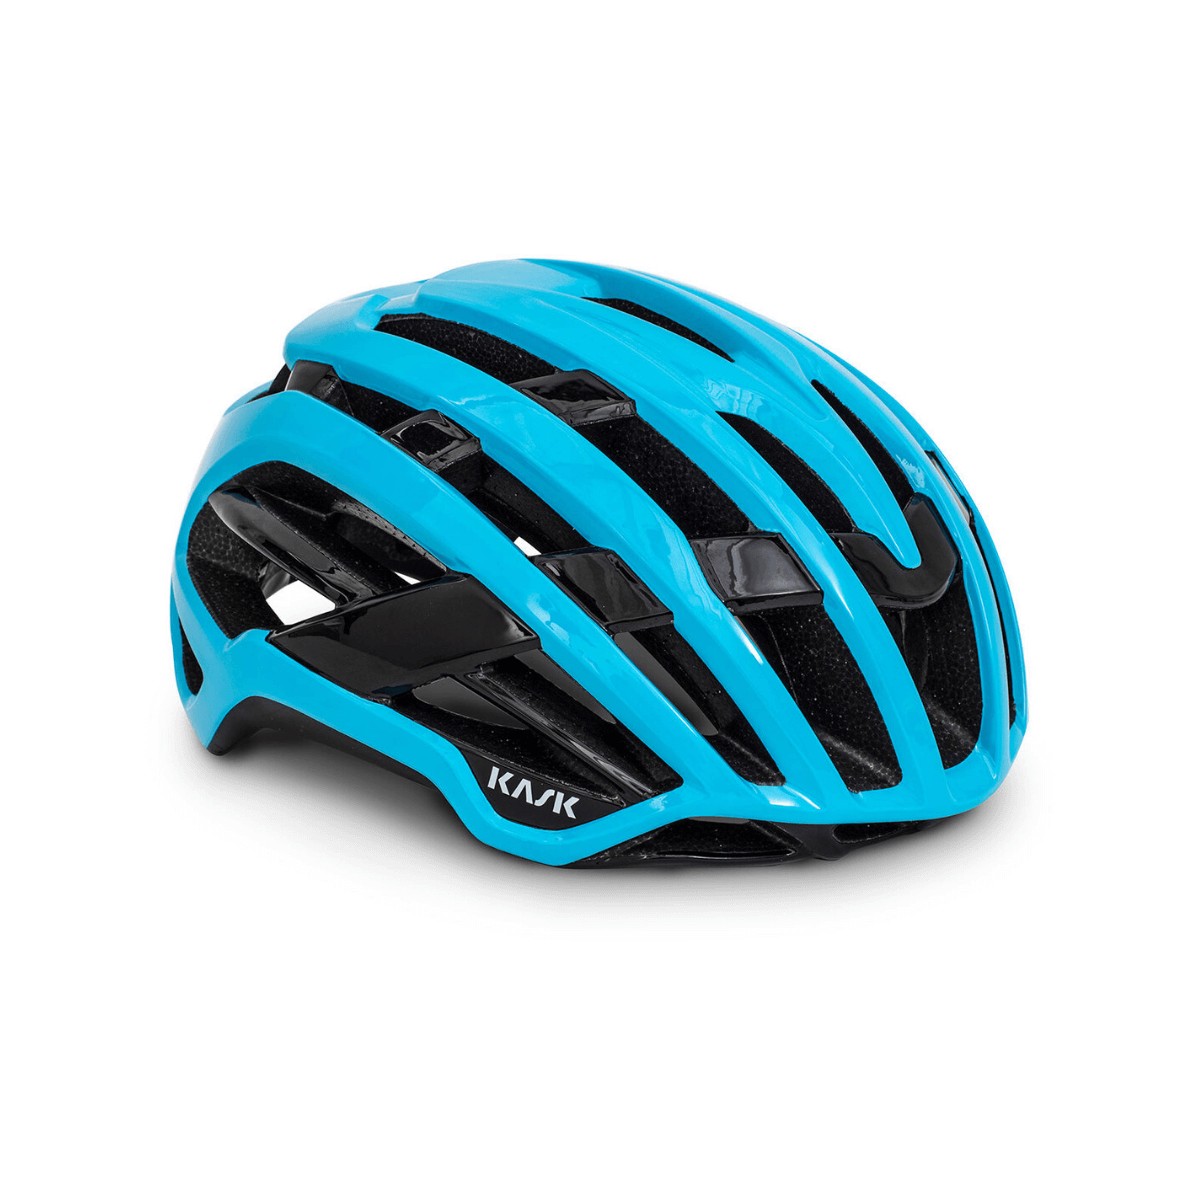 Photos - Bike Helmet Kask Valegro Blue Helmet, Size L che00052.218/L 